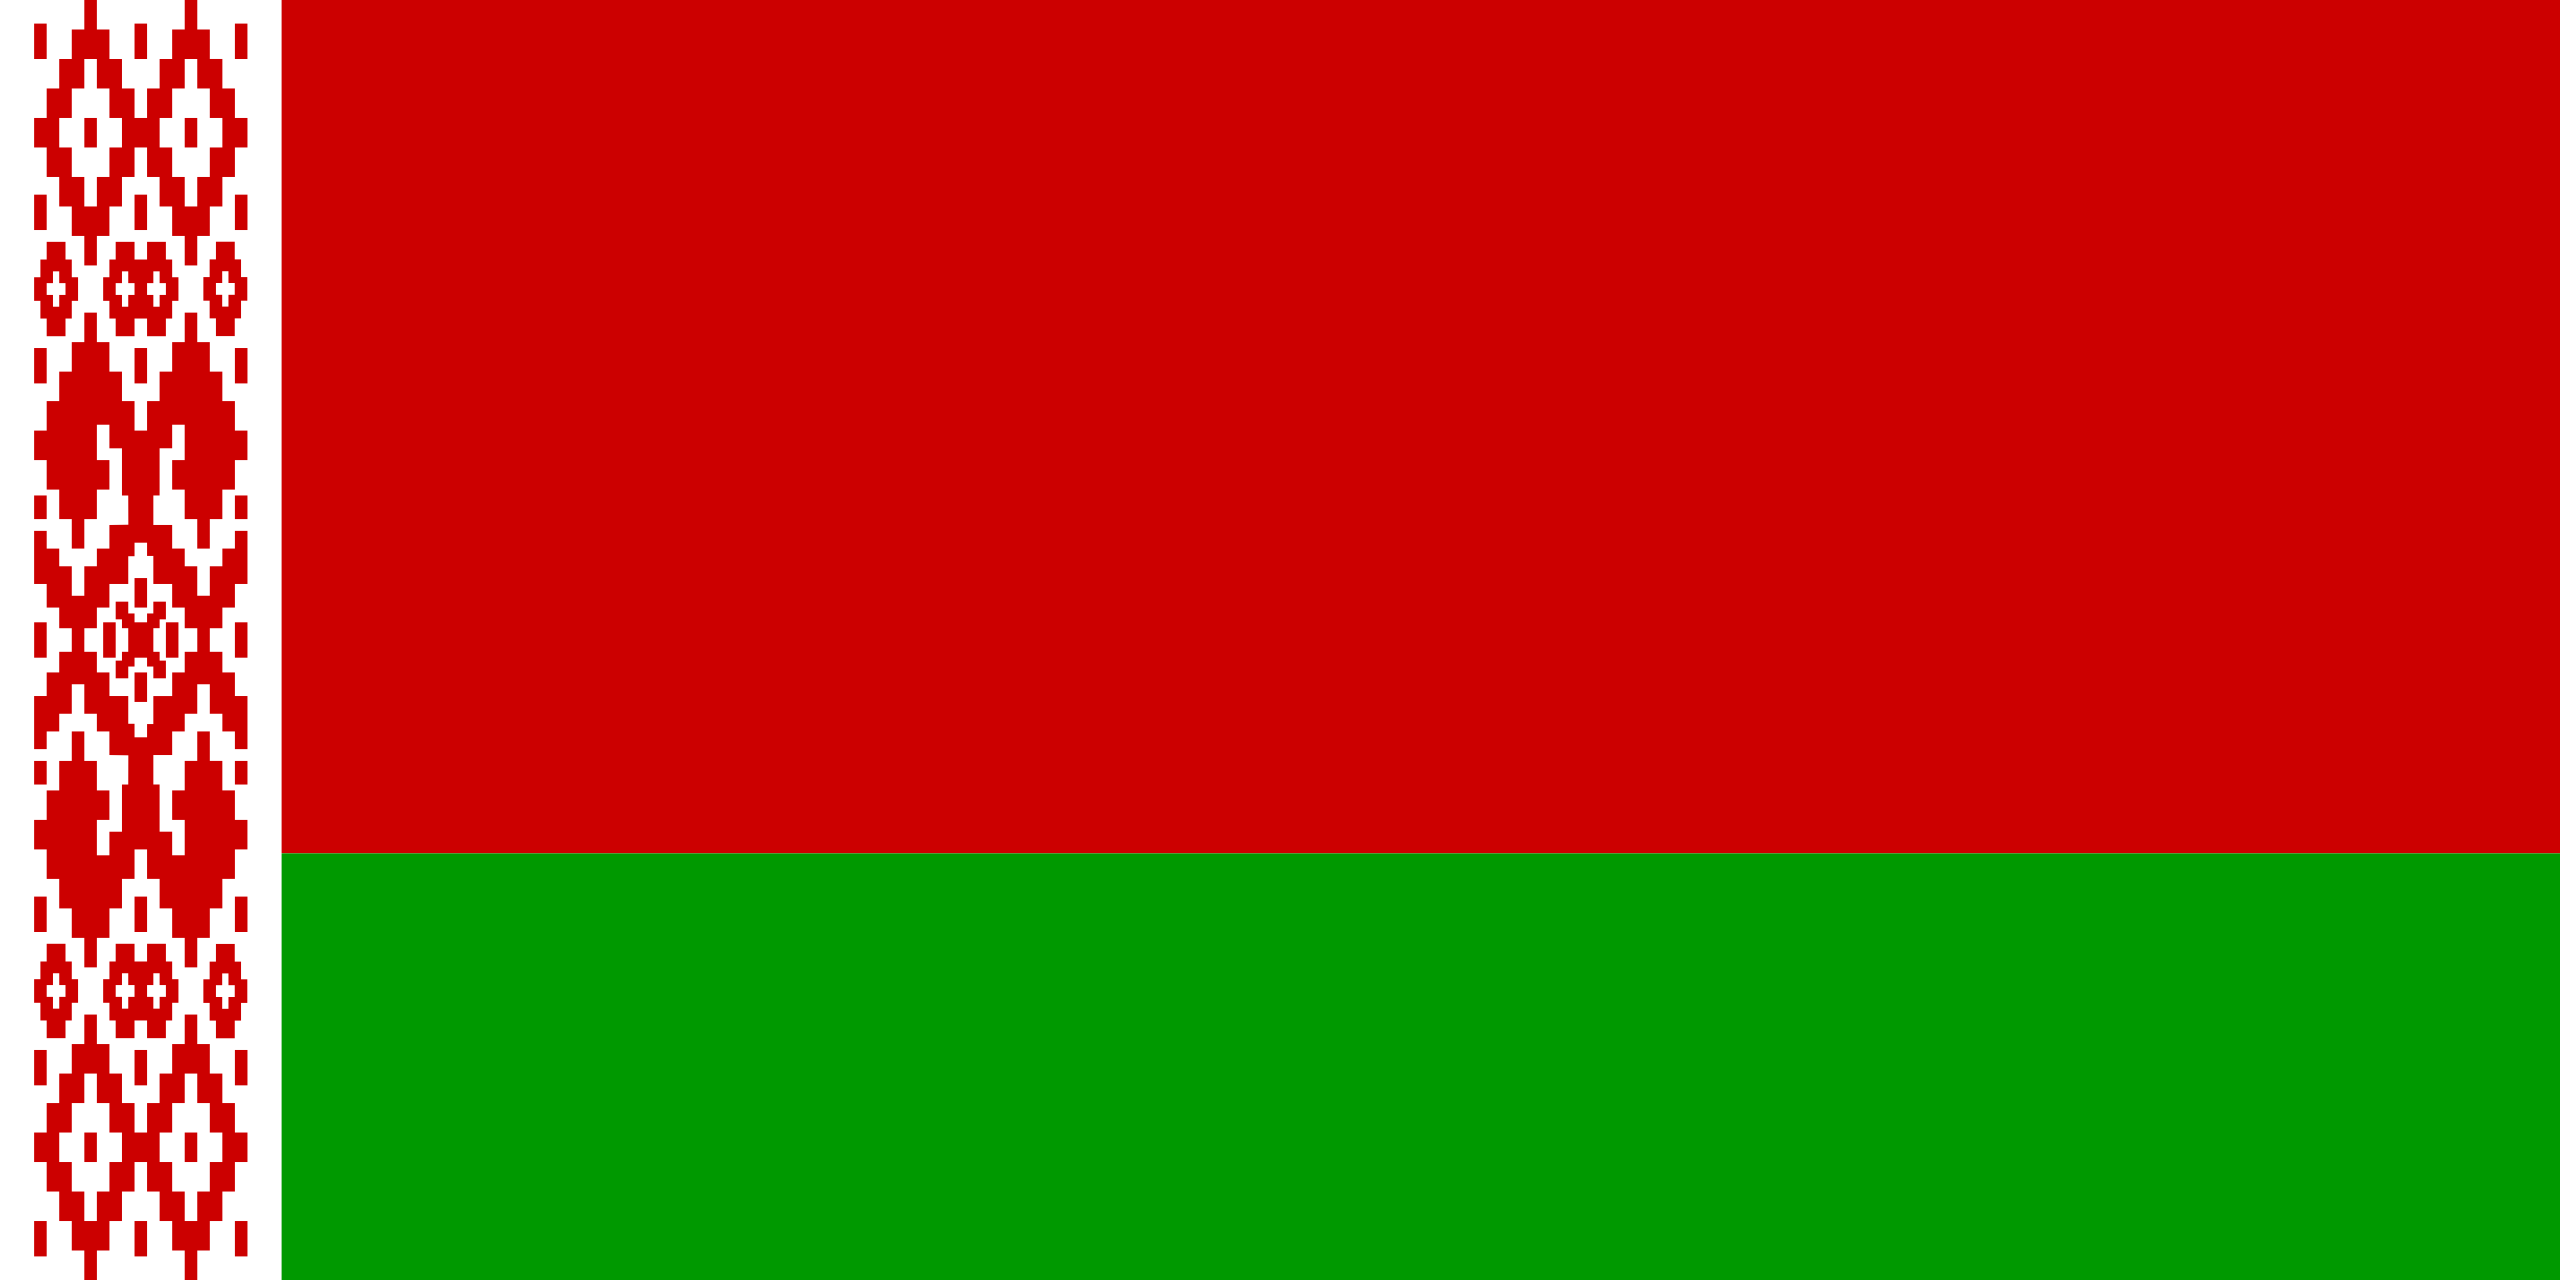 A new member of WBHF will be Belarus | WBDHF